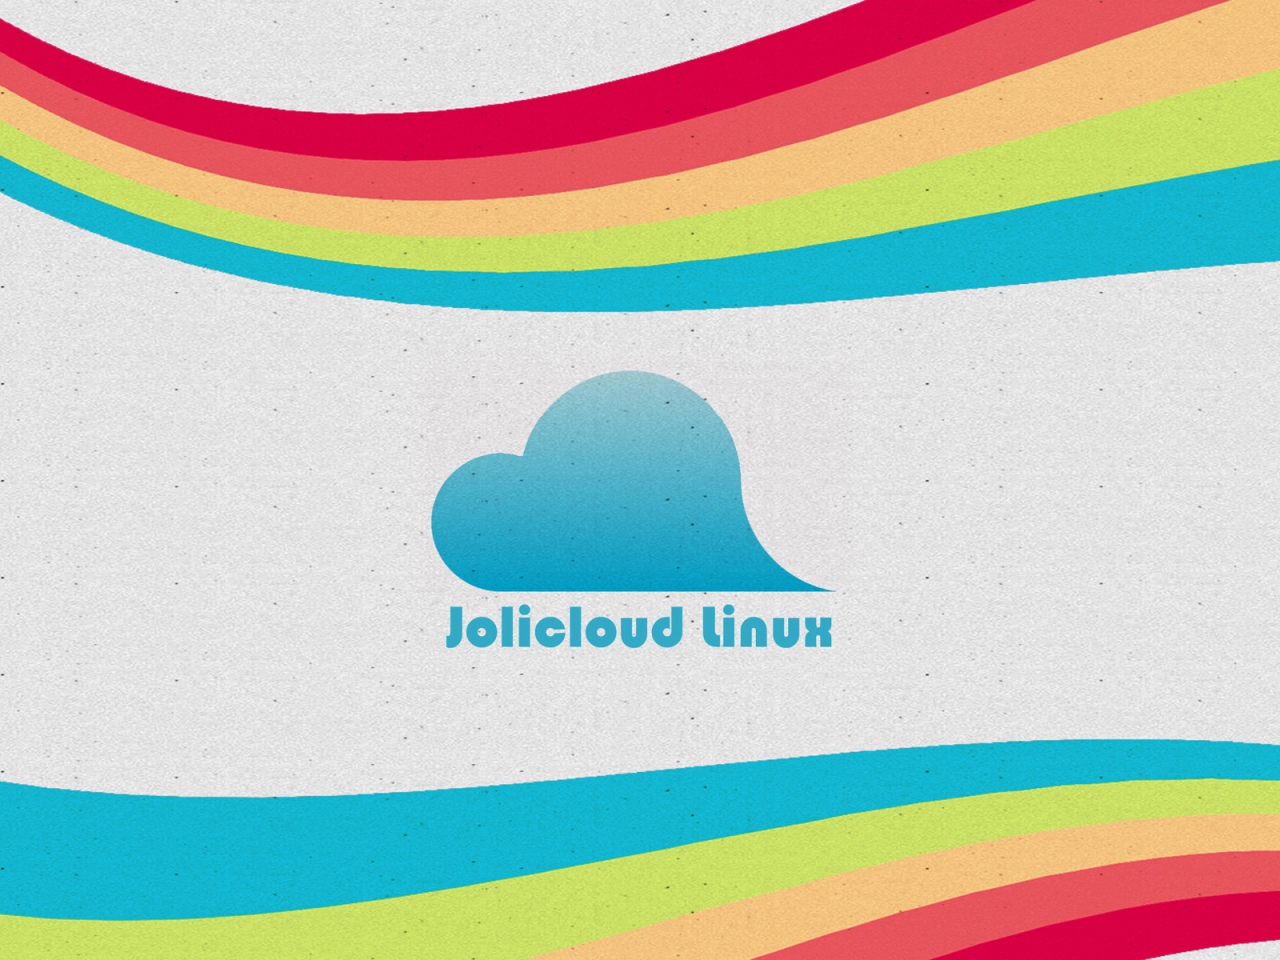 Jolicloud Linux X Wallpaper